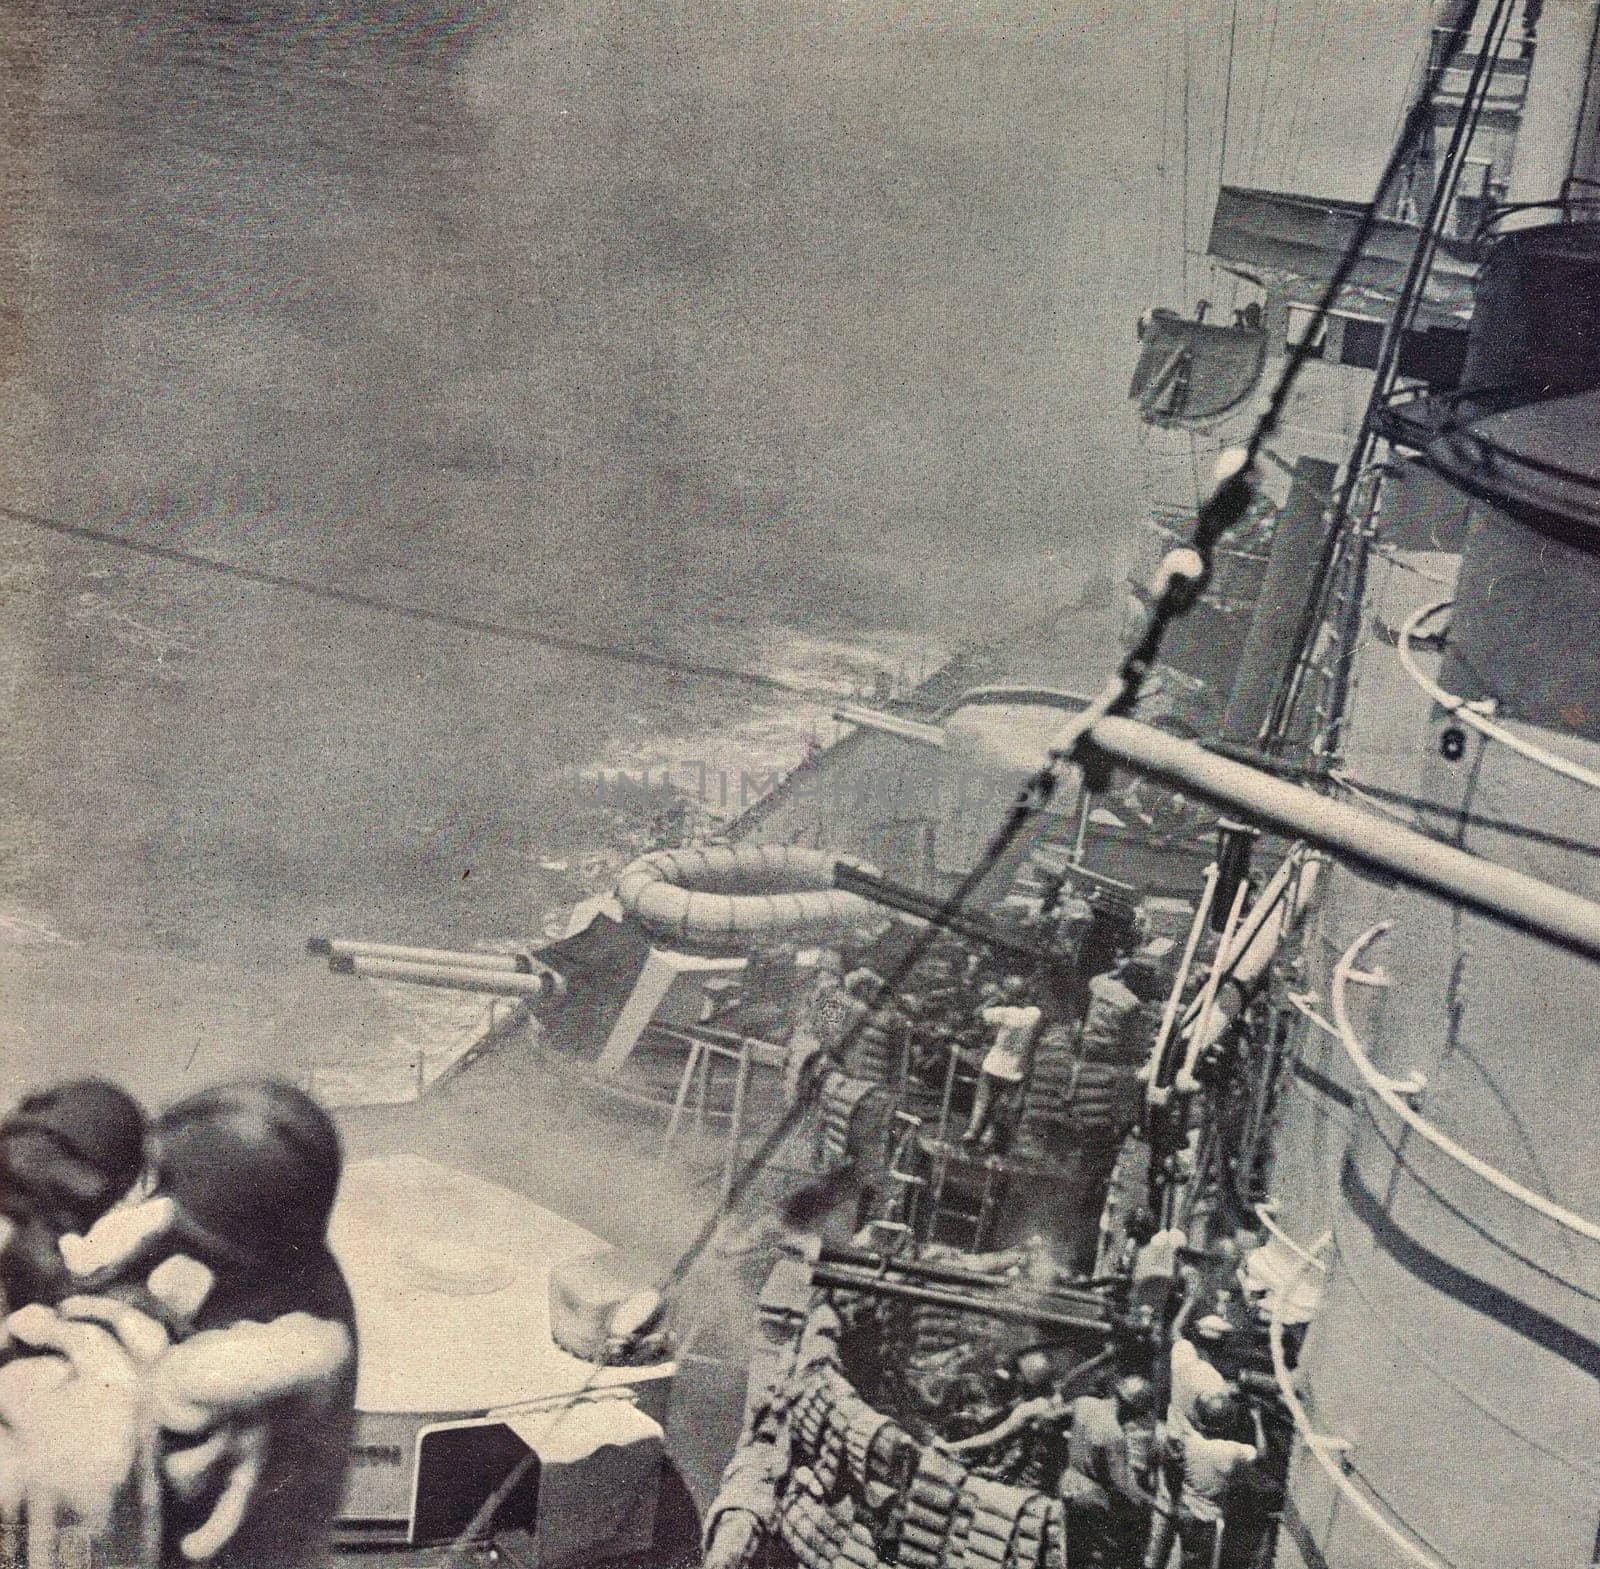 The Italian war ship in the Mediterranean Sea during World War 2.a by roman_nerud